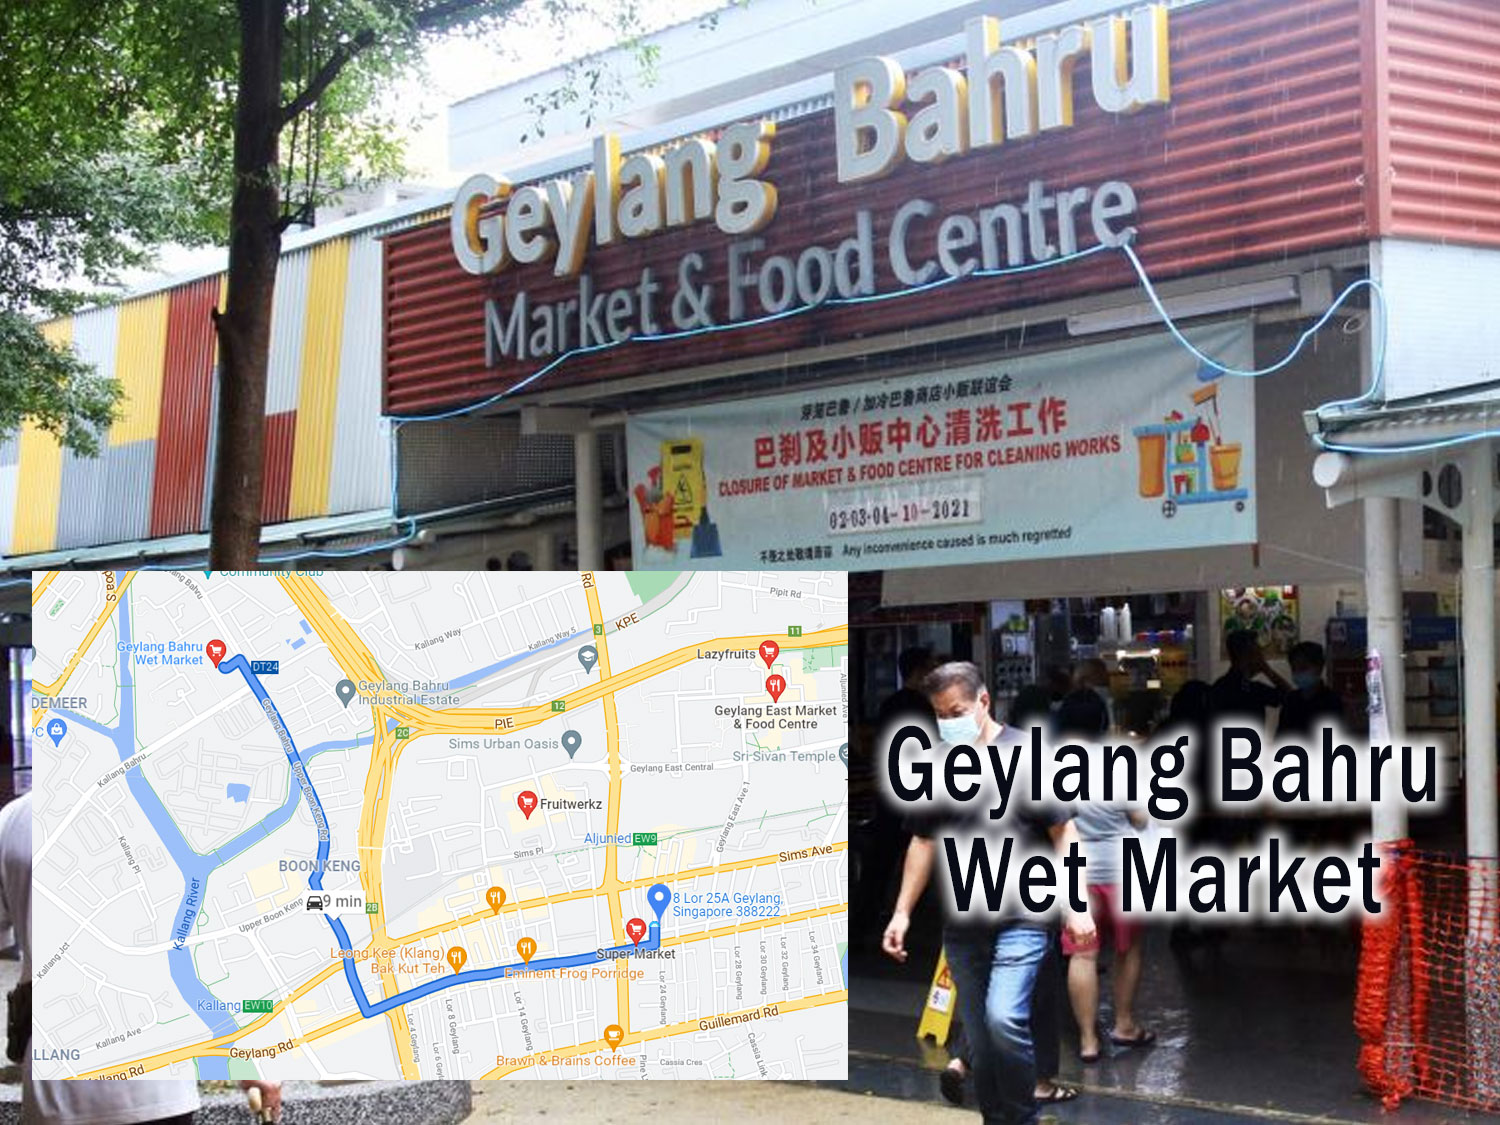 9 minutes drive from Zyanya Condo to Geylang Bahru Wet Market